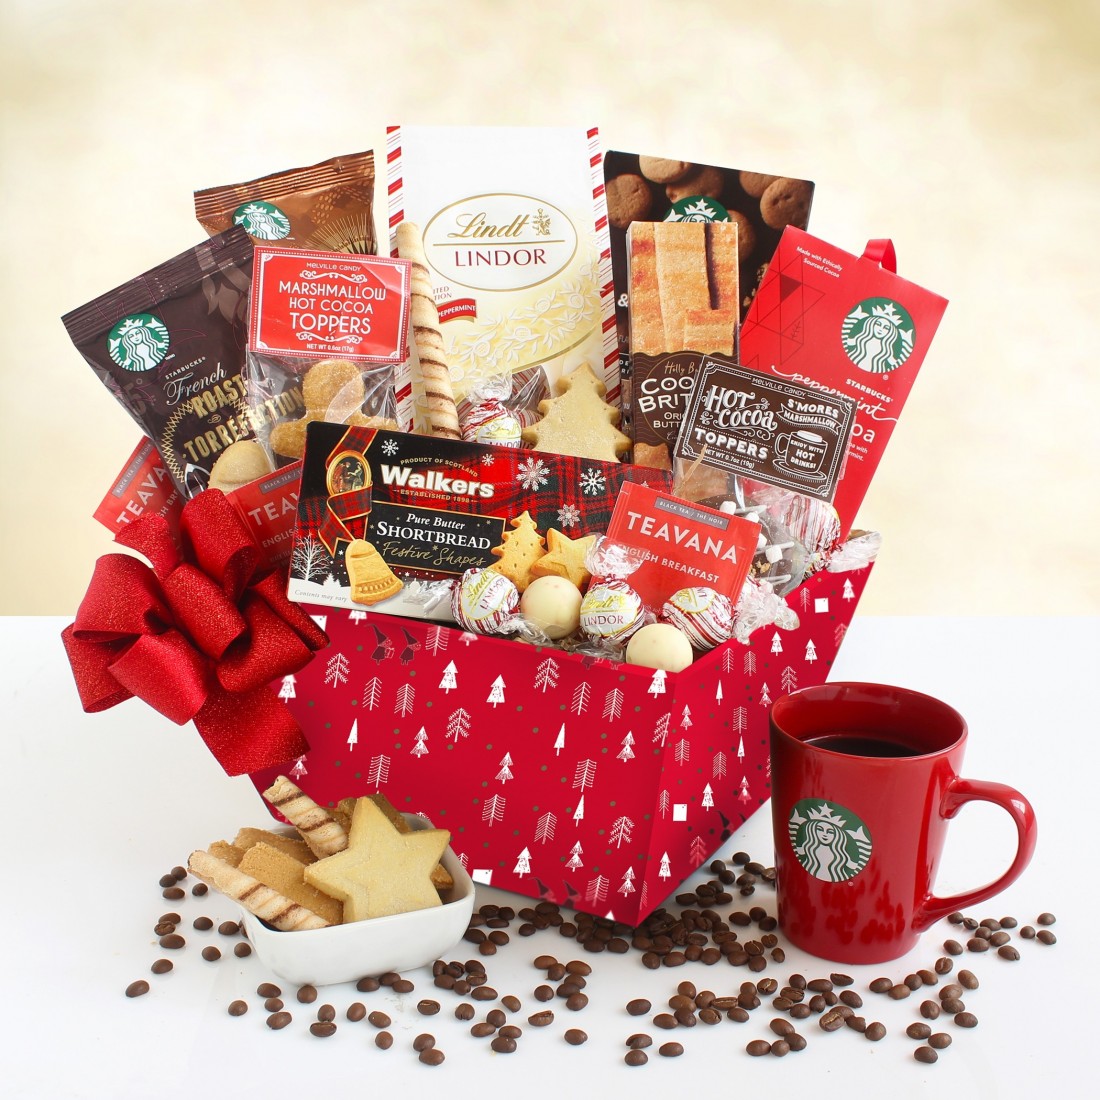 A Starbucks Christmas Morning Food Gift Basket 5296 At Print EZ.